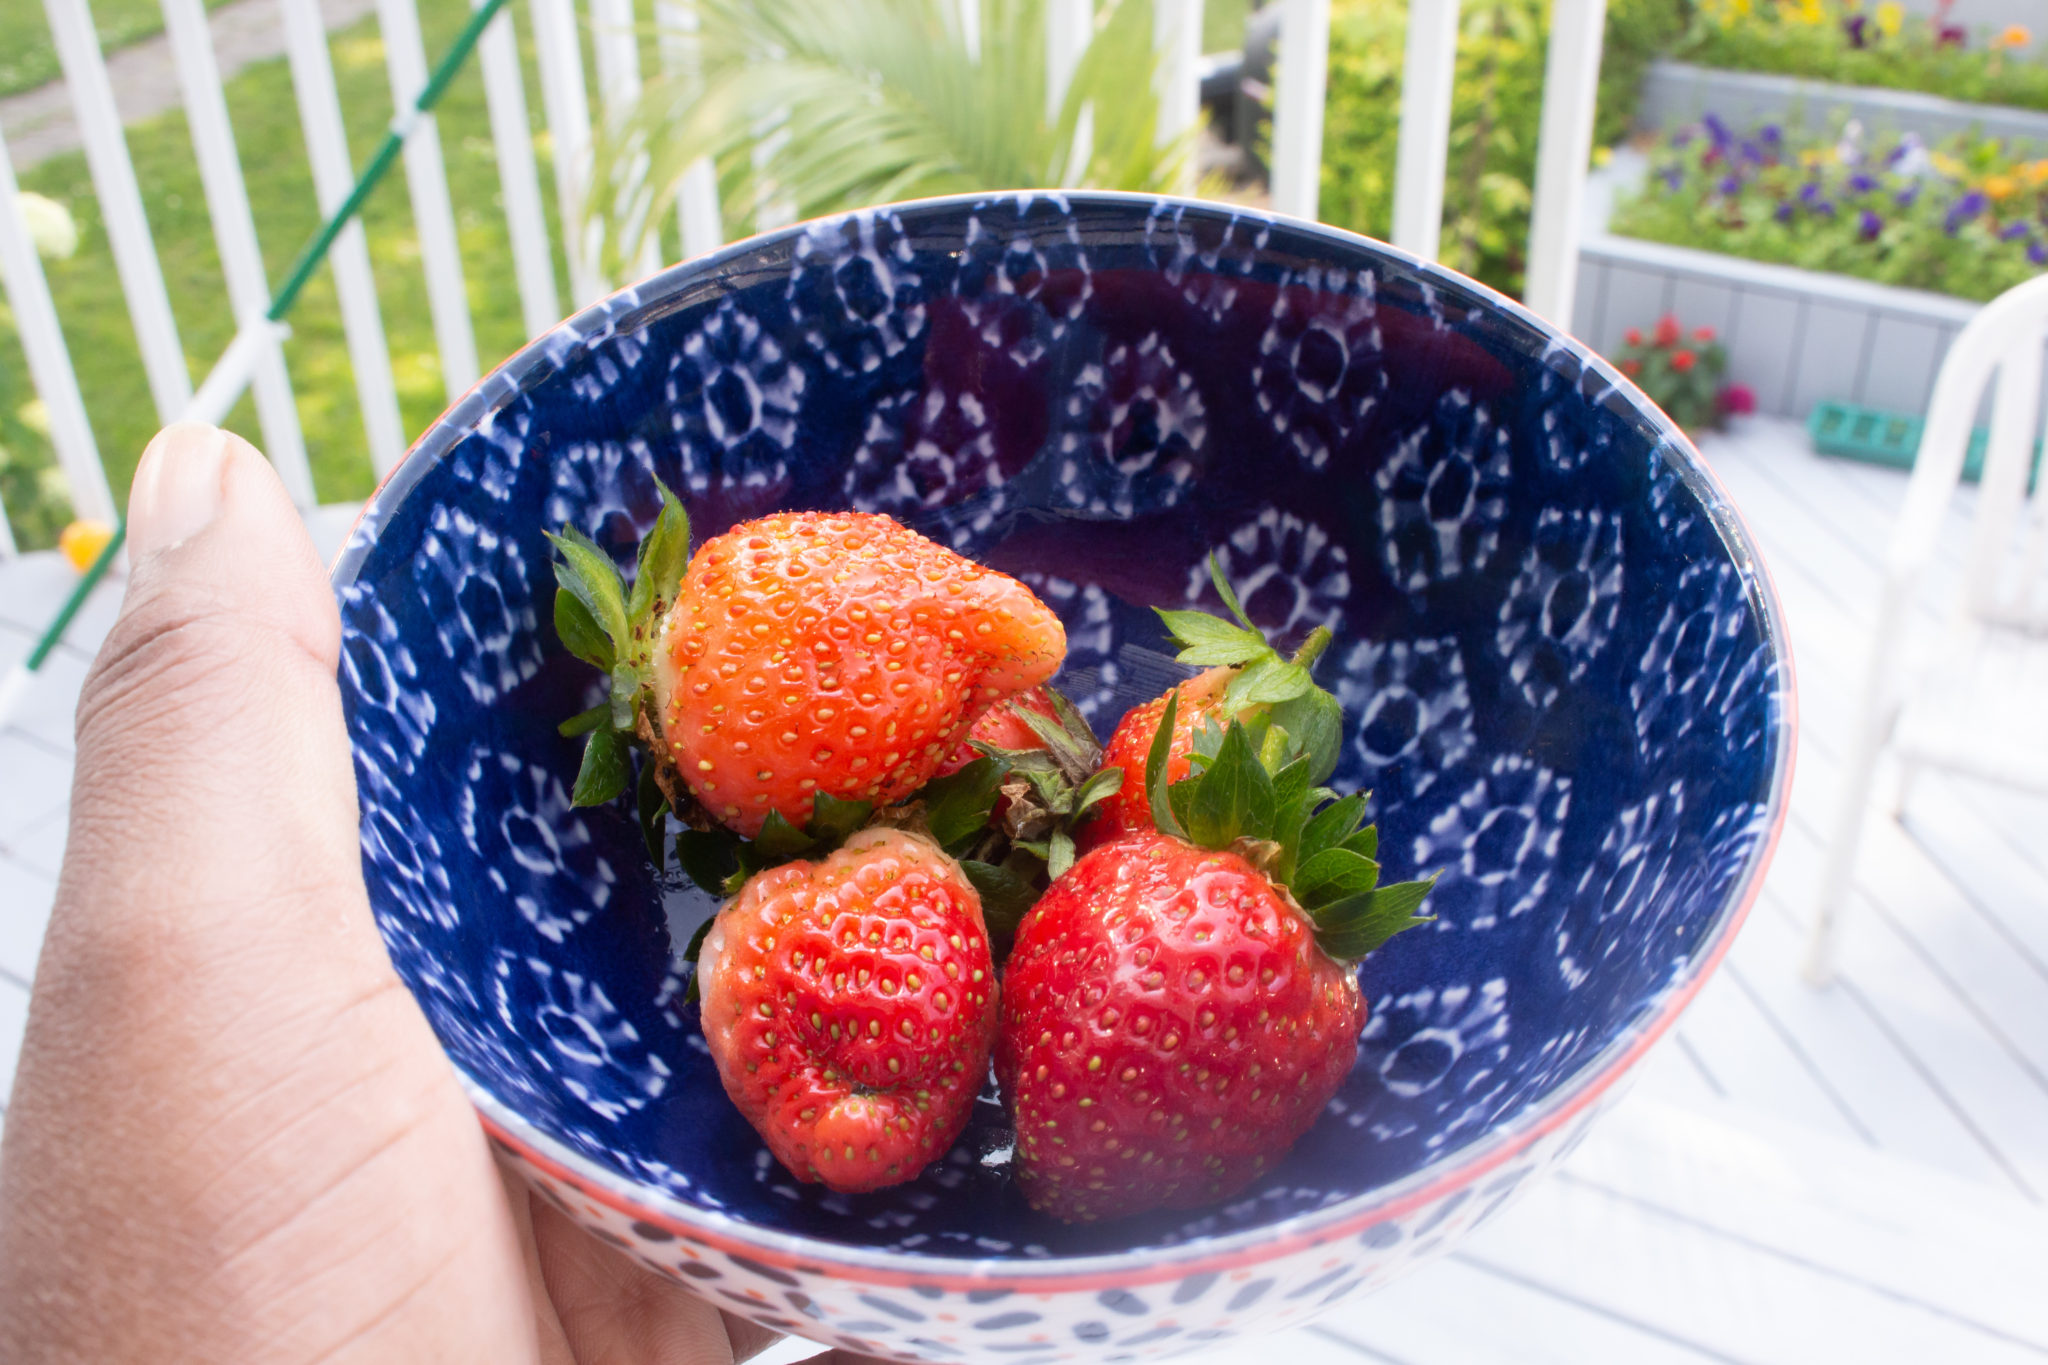 Garden Update: Strawberry picking in our own yard!